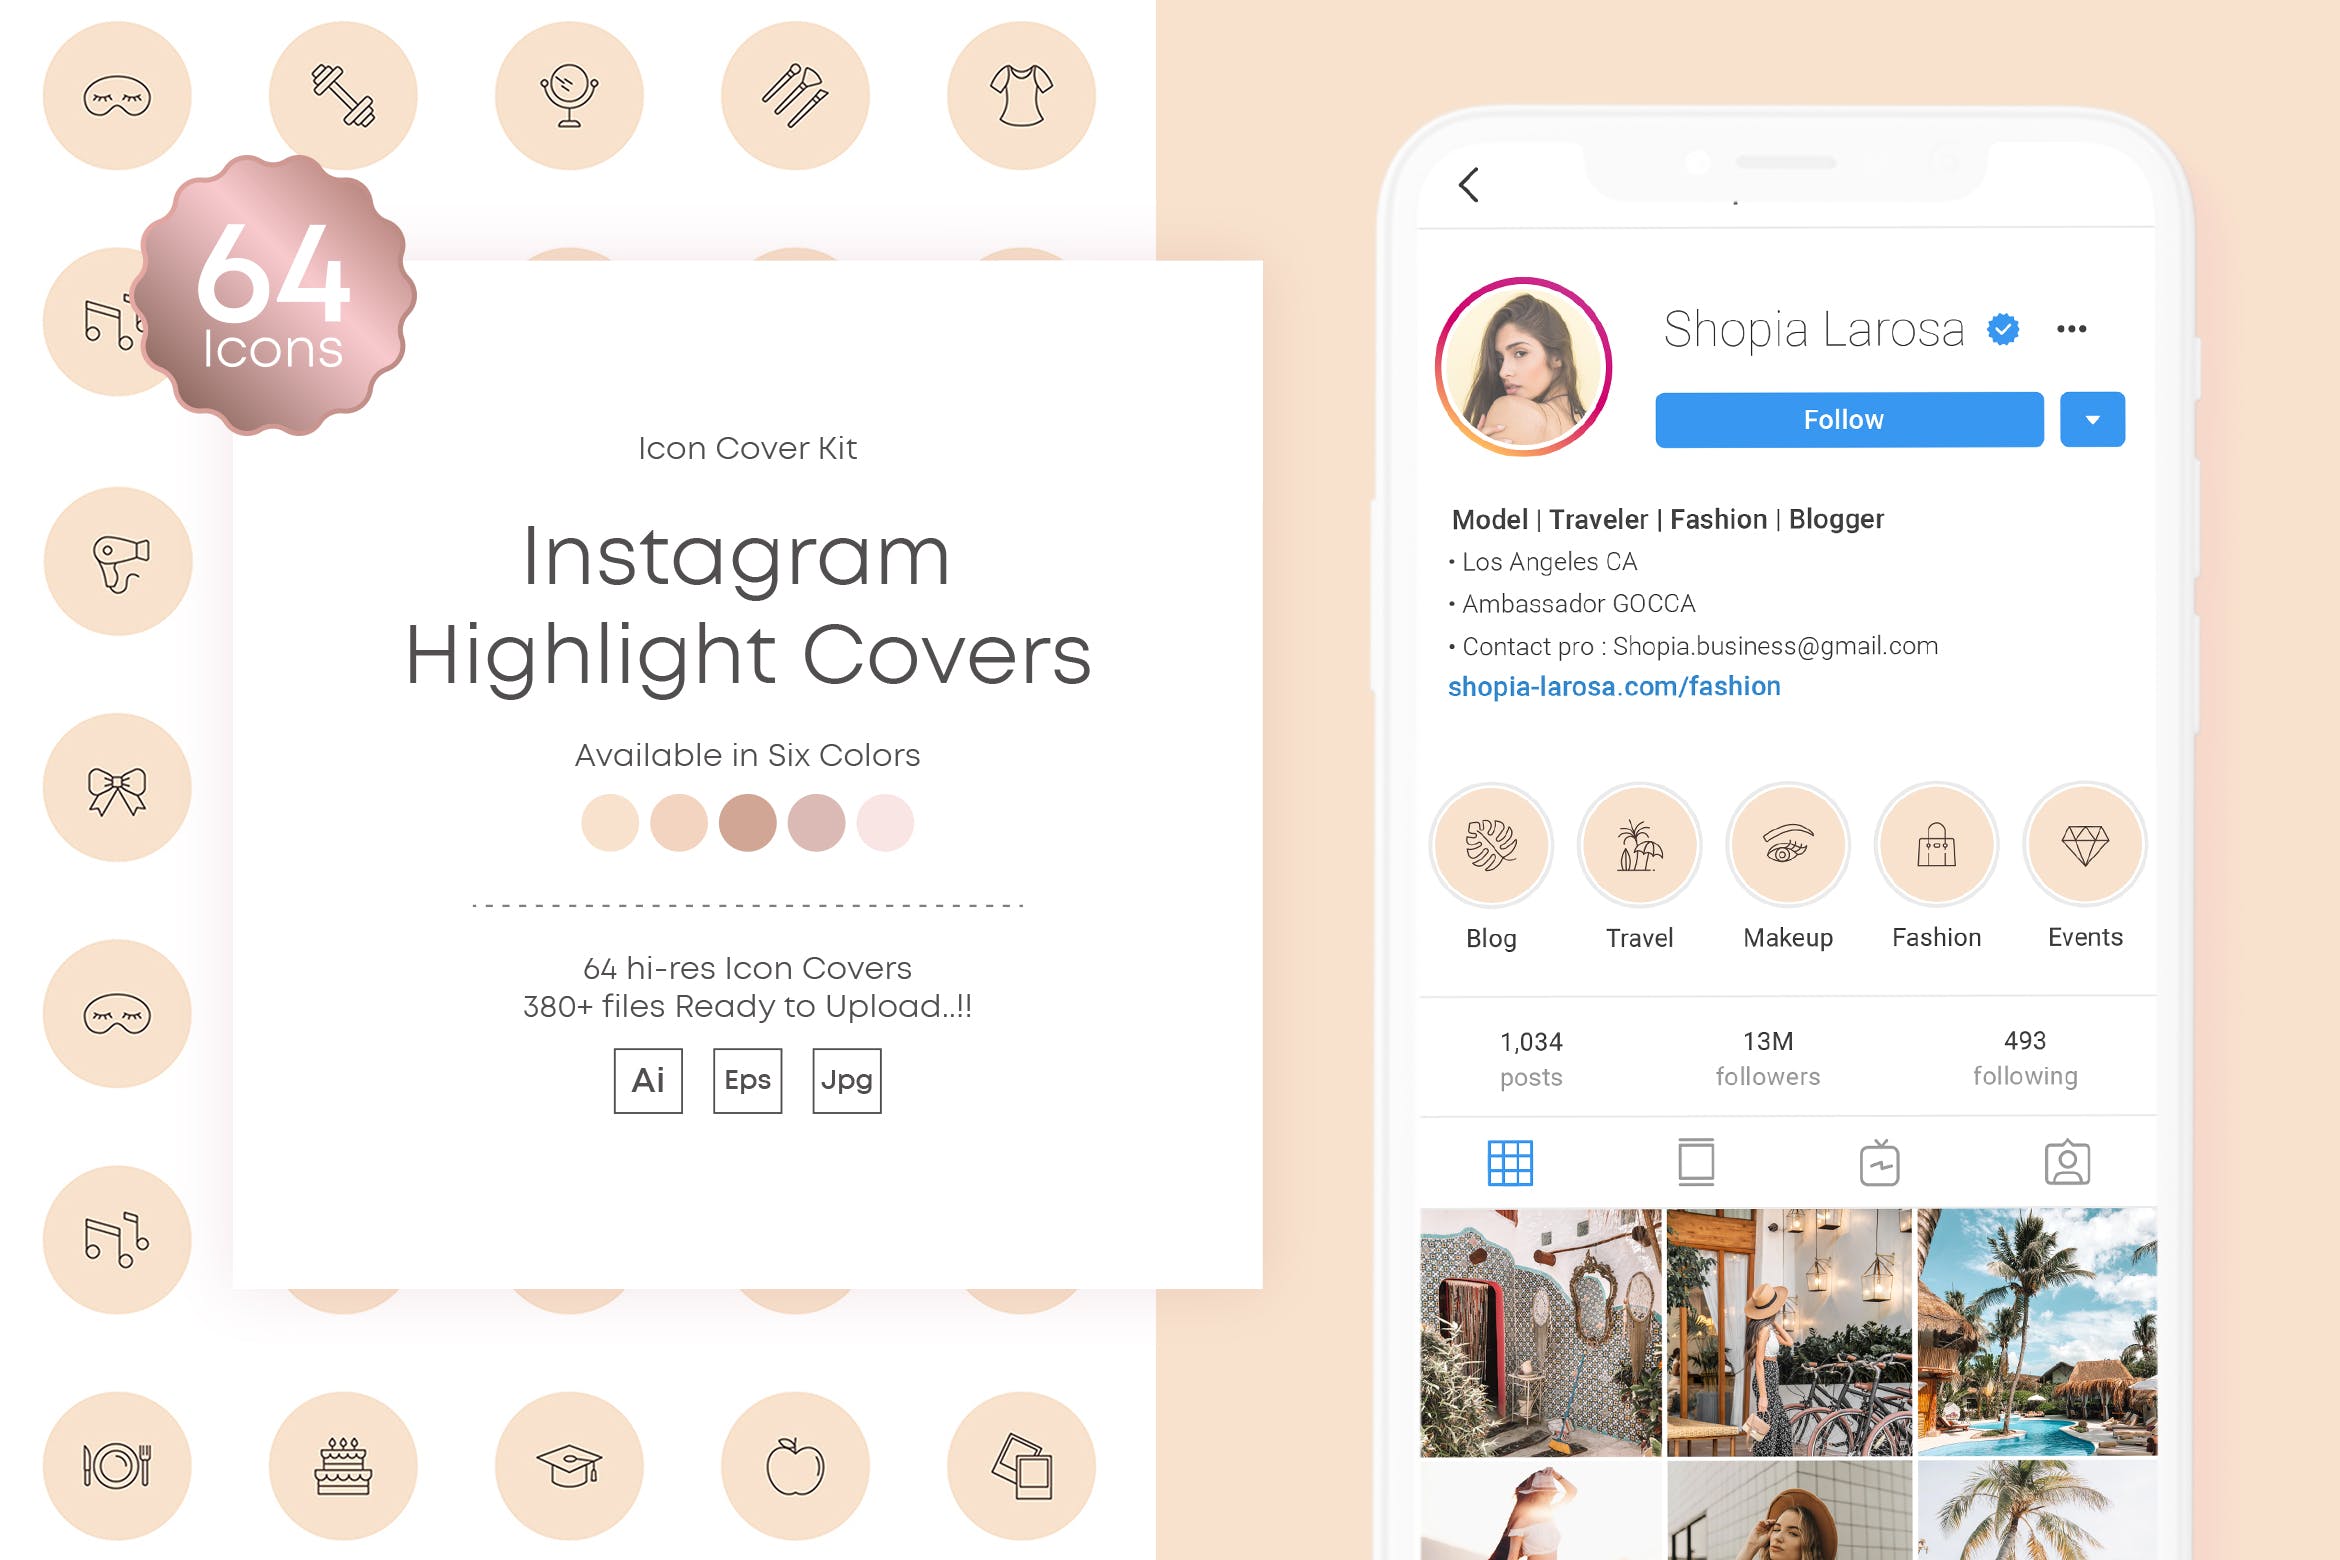 Instagram品牌故事封面设计图标集 Instagram stories Highlights Covers Icon Kit插图